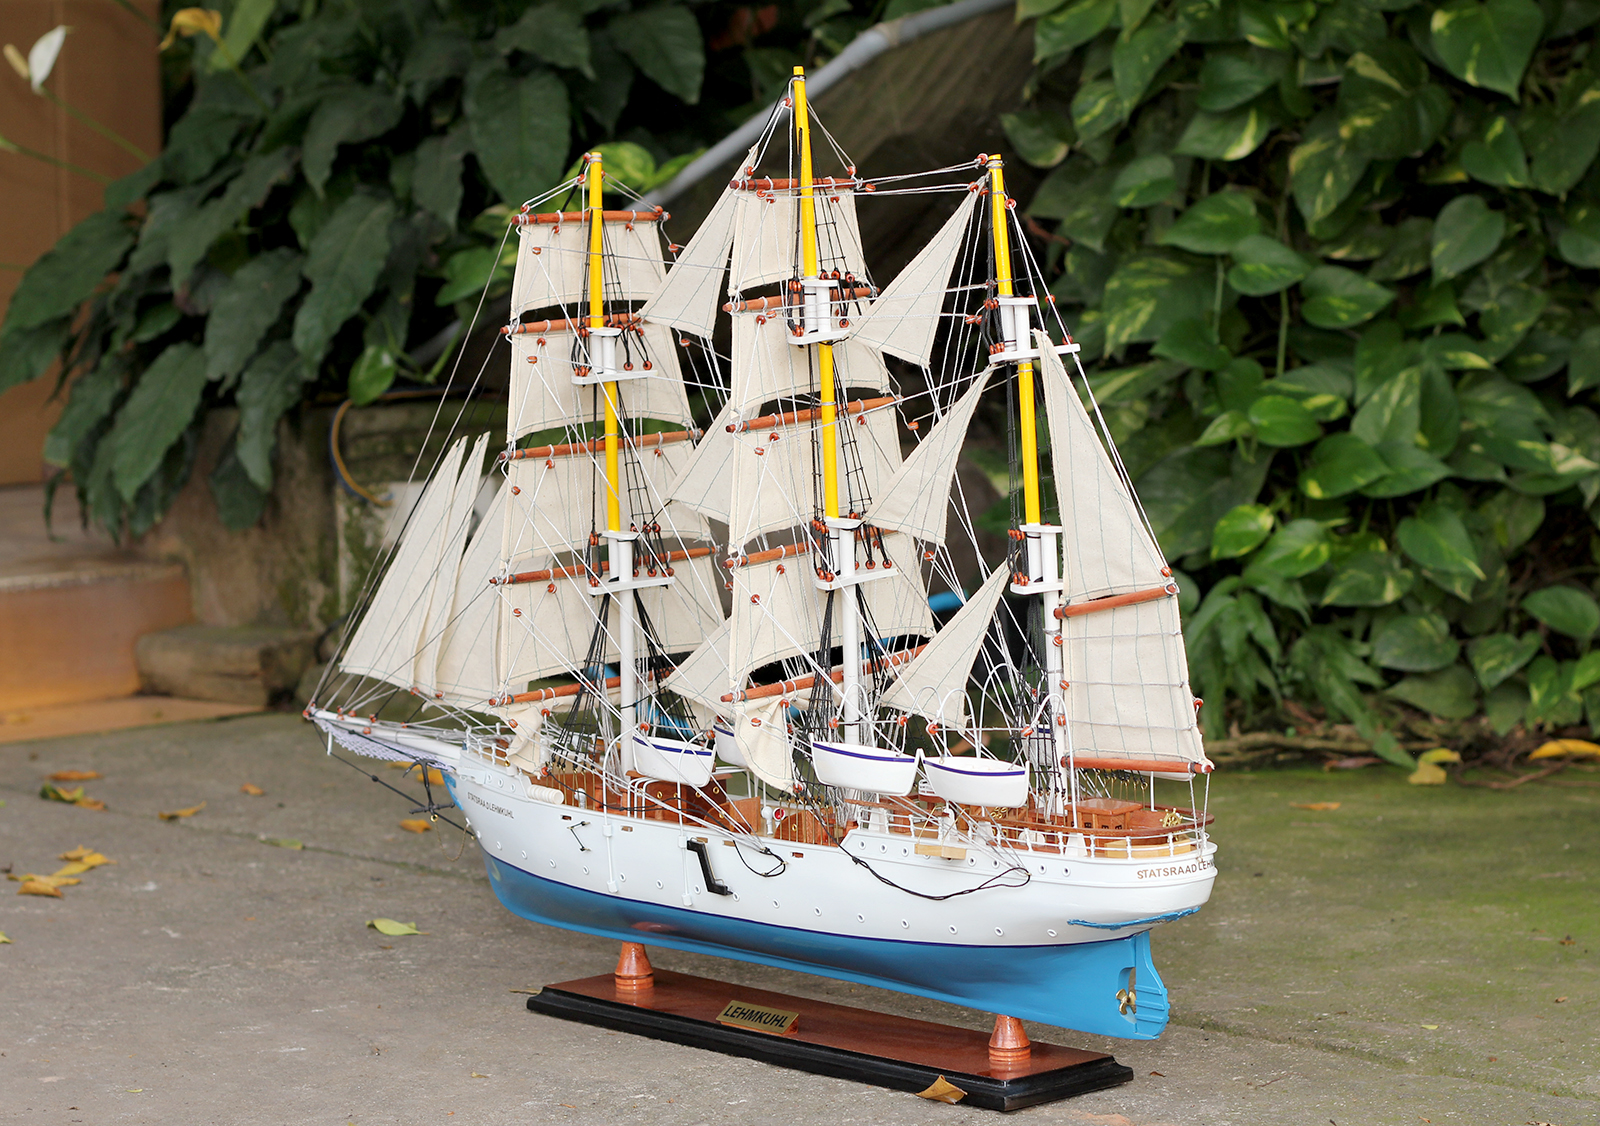 Thuyền buồm gỗ trang trí Lehmkuhl dài 95cm (lắp ráp sẵn)